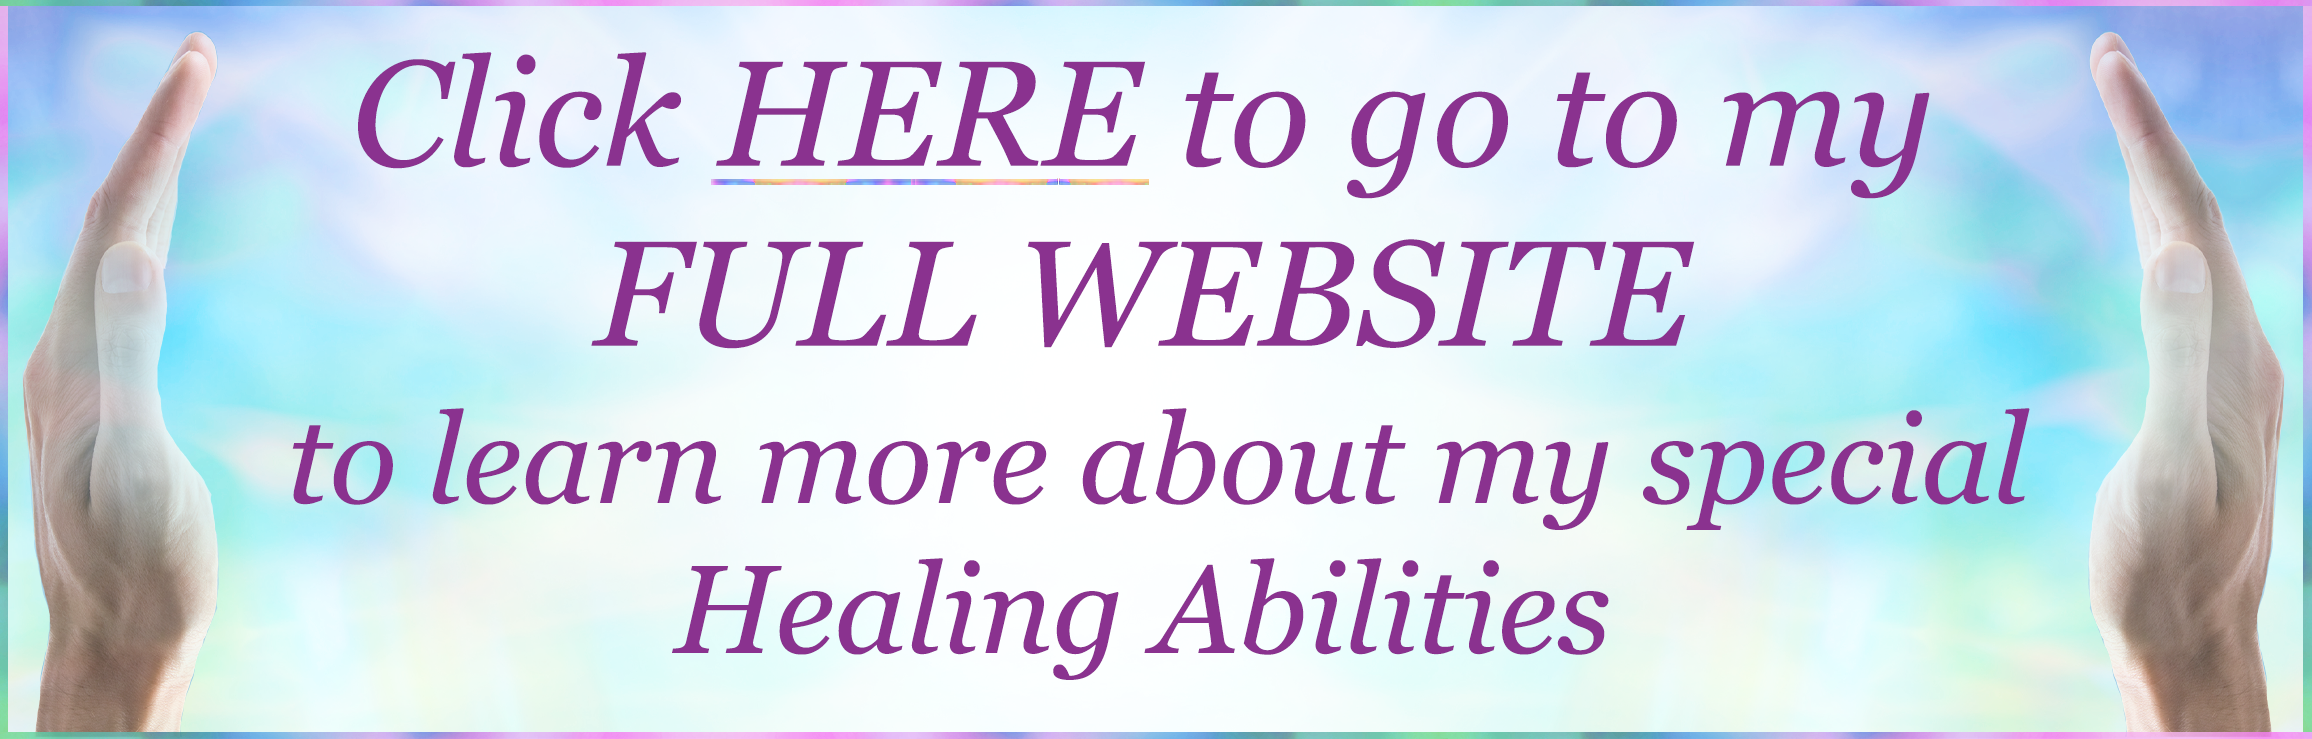 Healing rainbow hands Button -Go to my full website